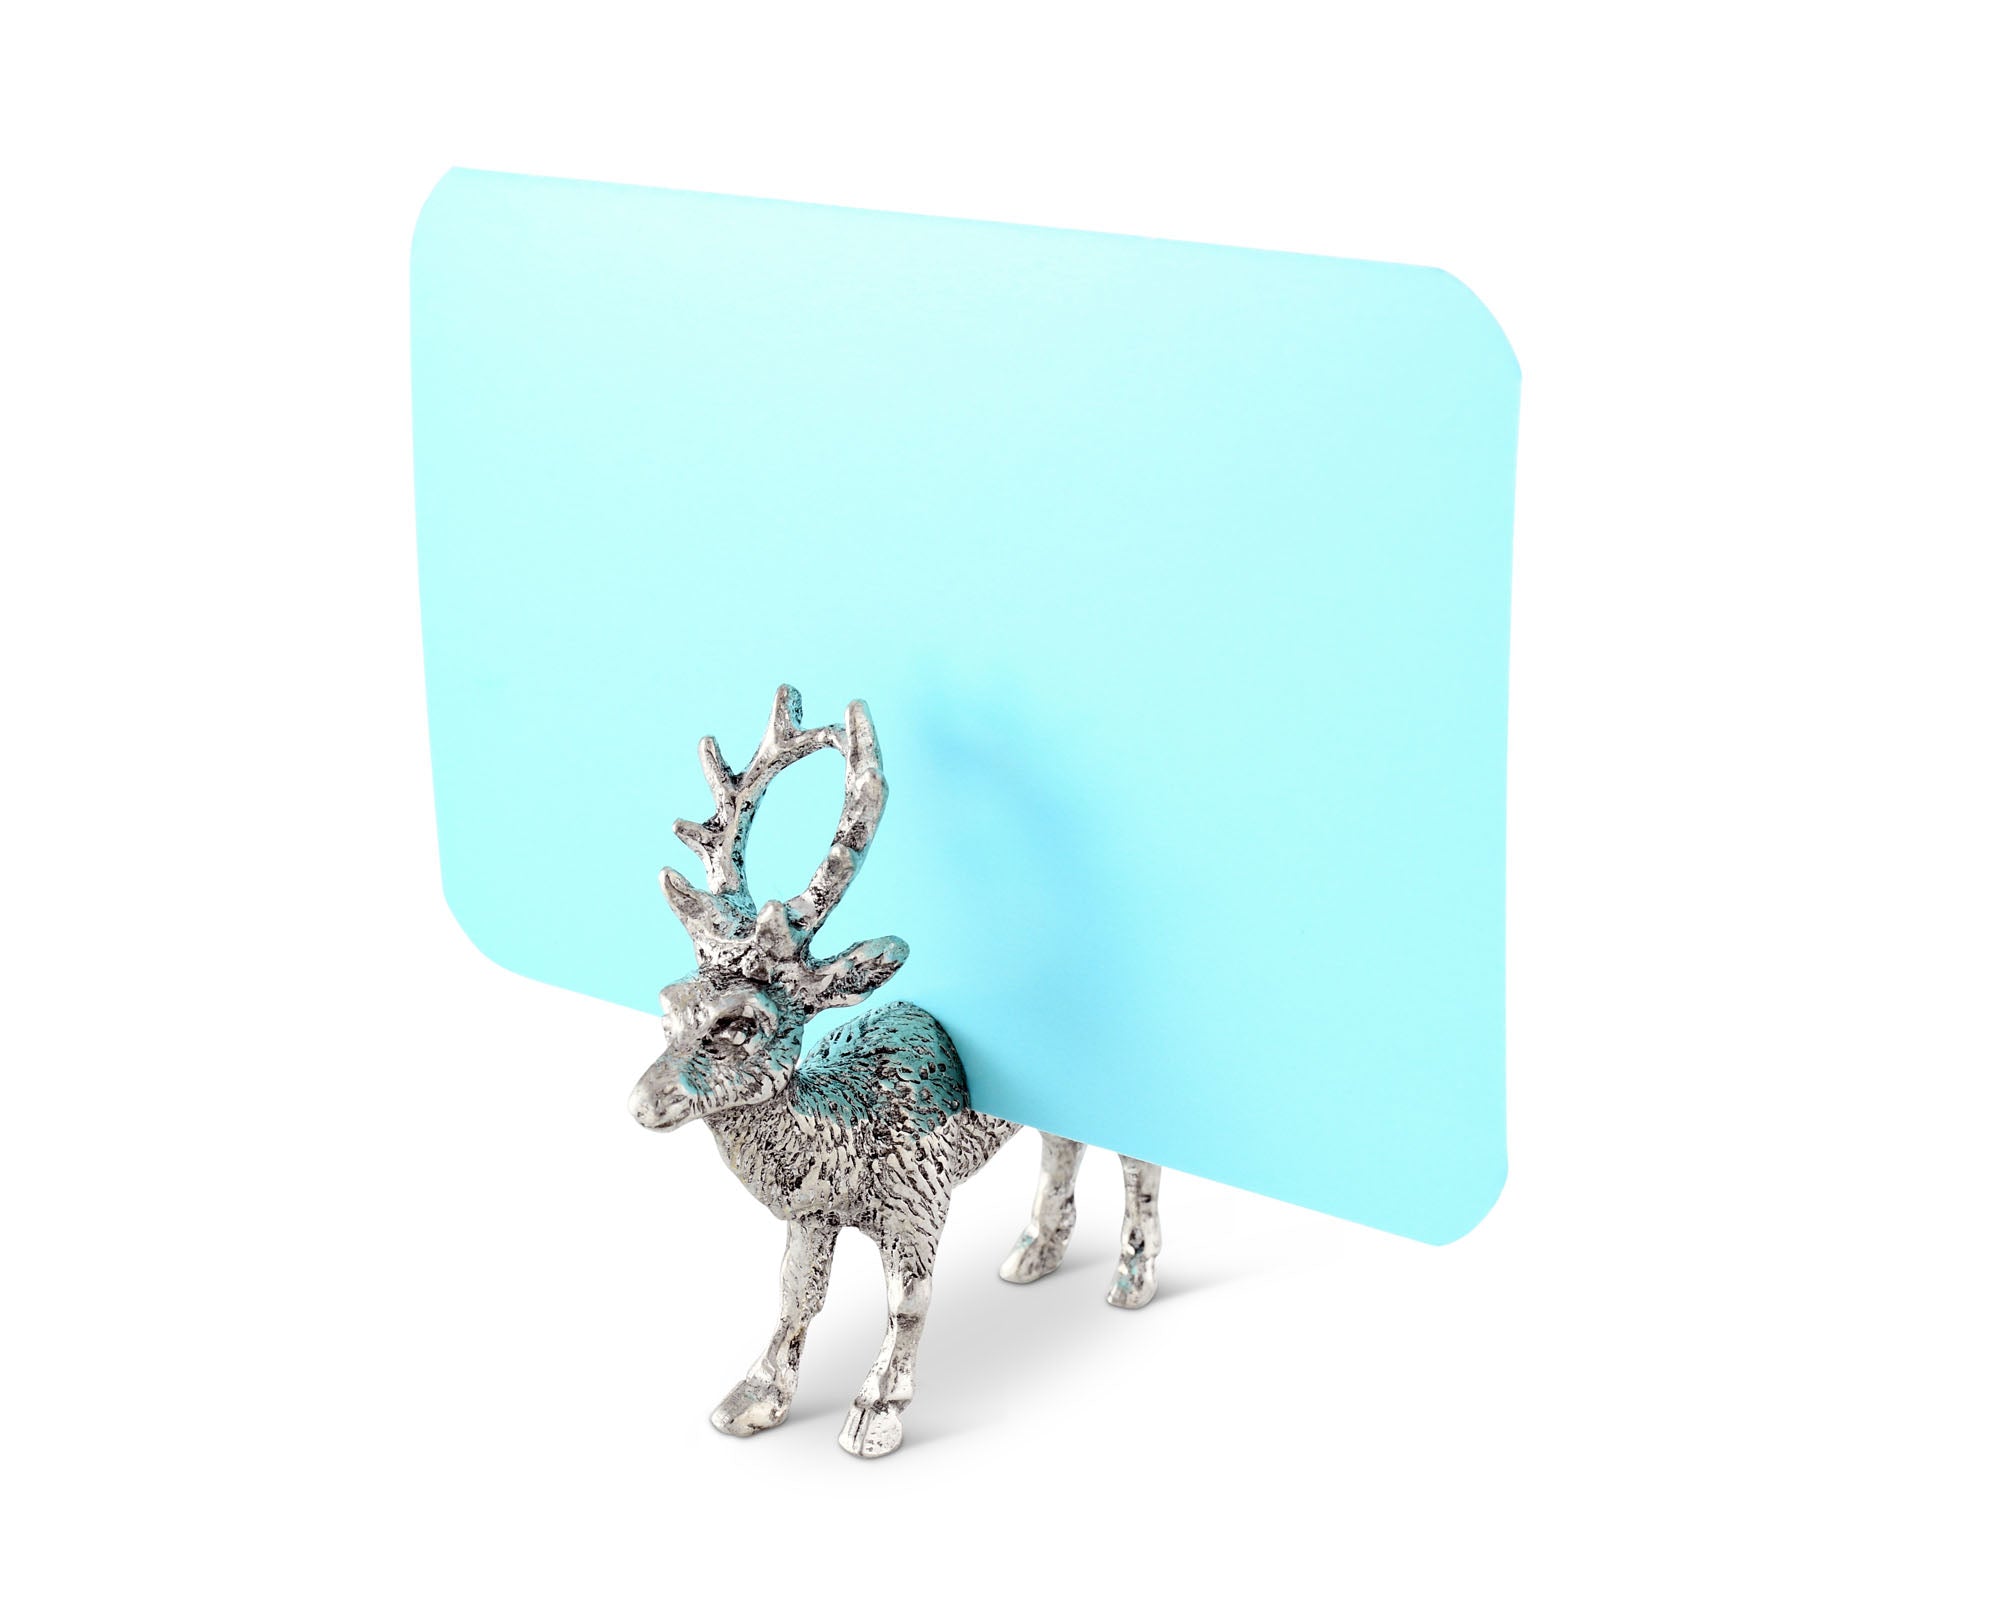 Vagabond House Pewter Deer Place Card Holder Product Image